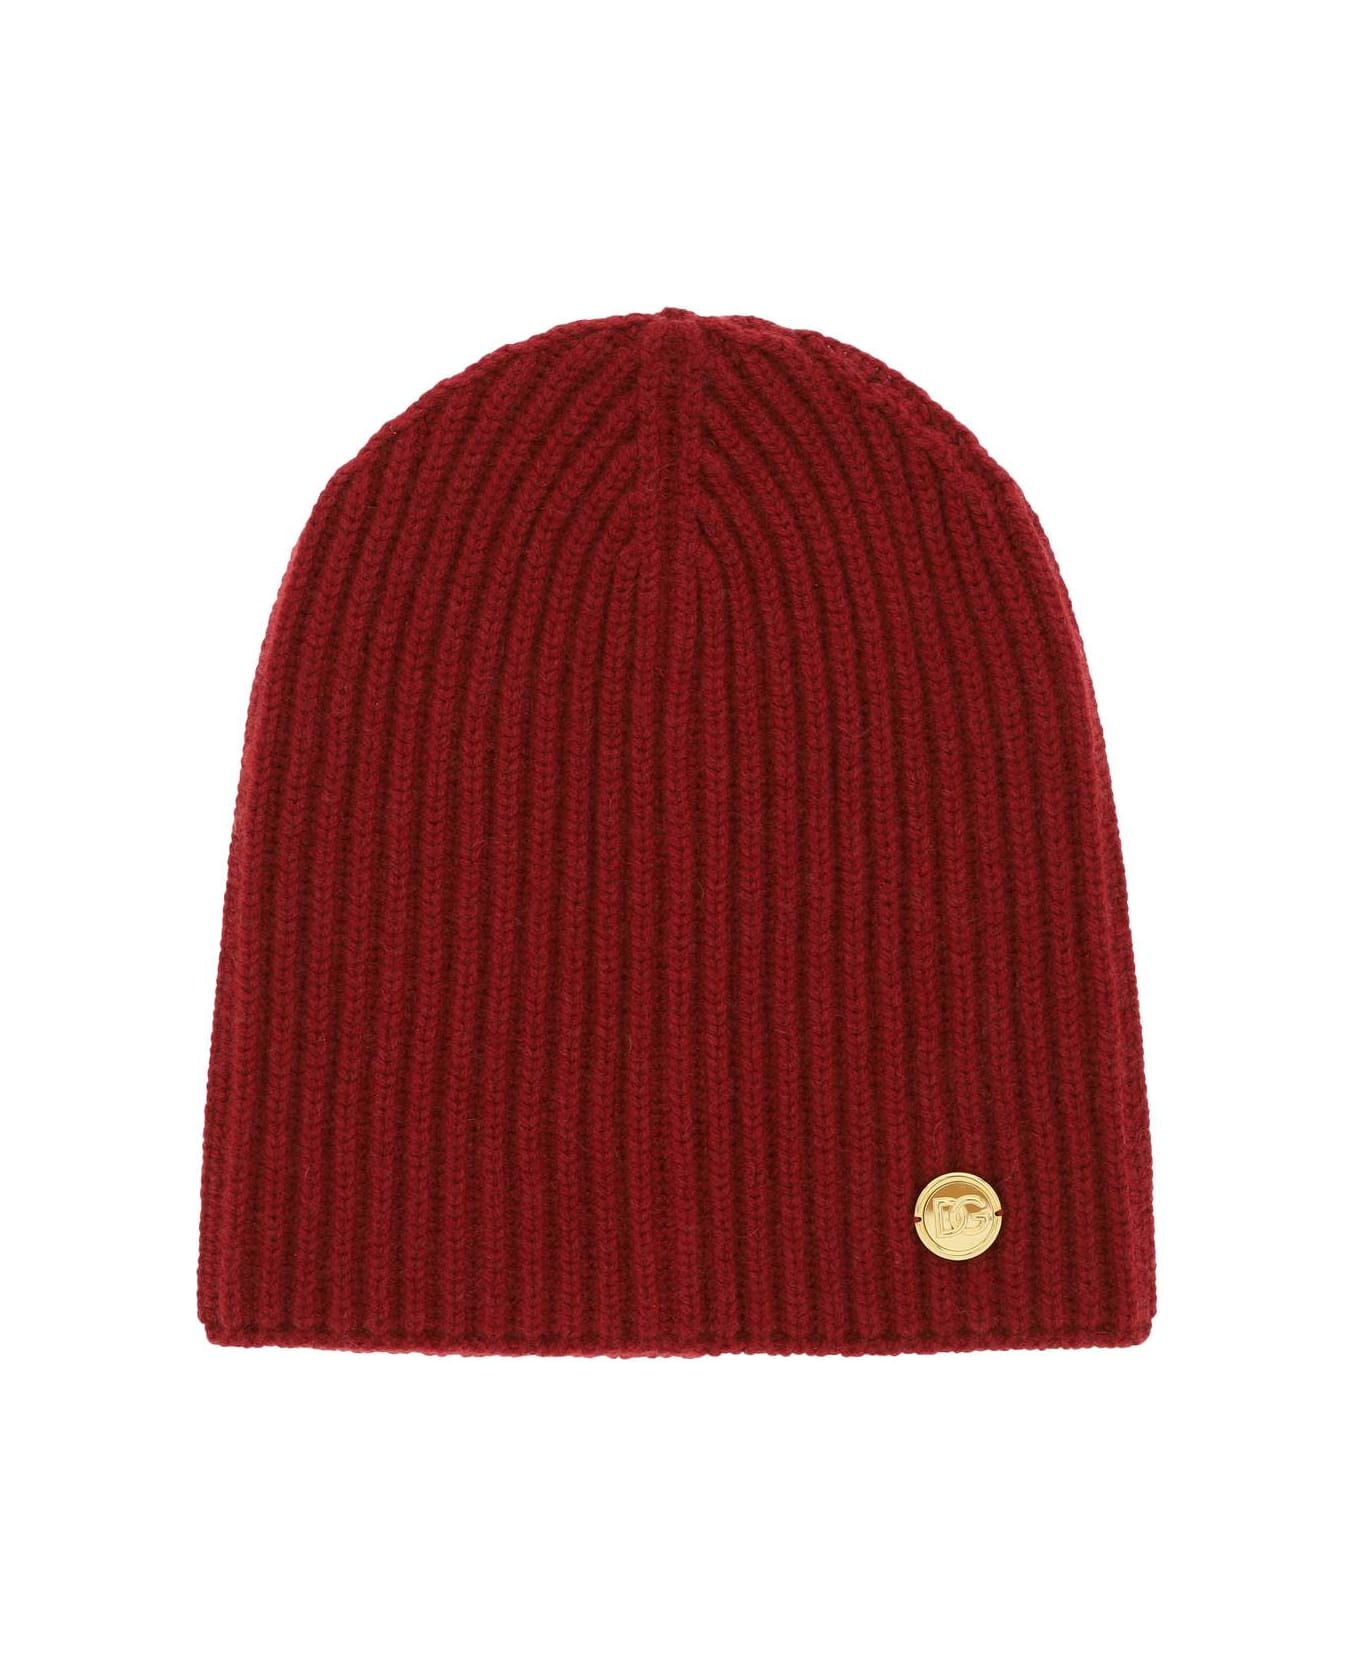 Dolce & Gabbana Cashmere Beanie Hat - BORDEAUX (Red) 帽子